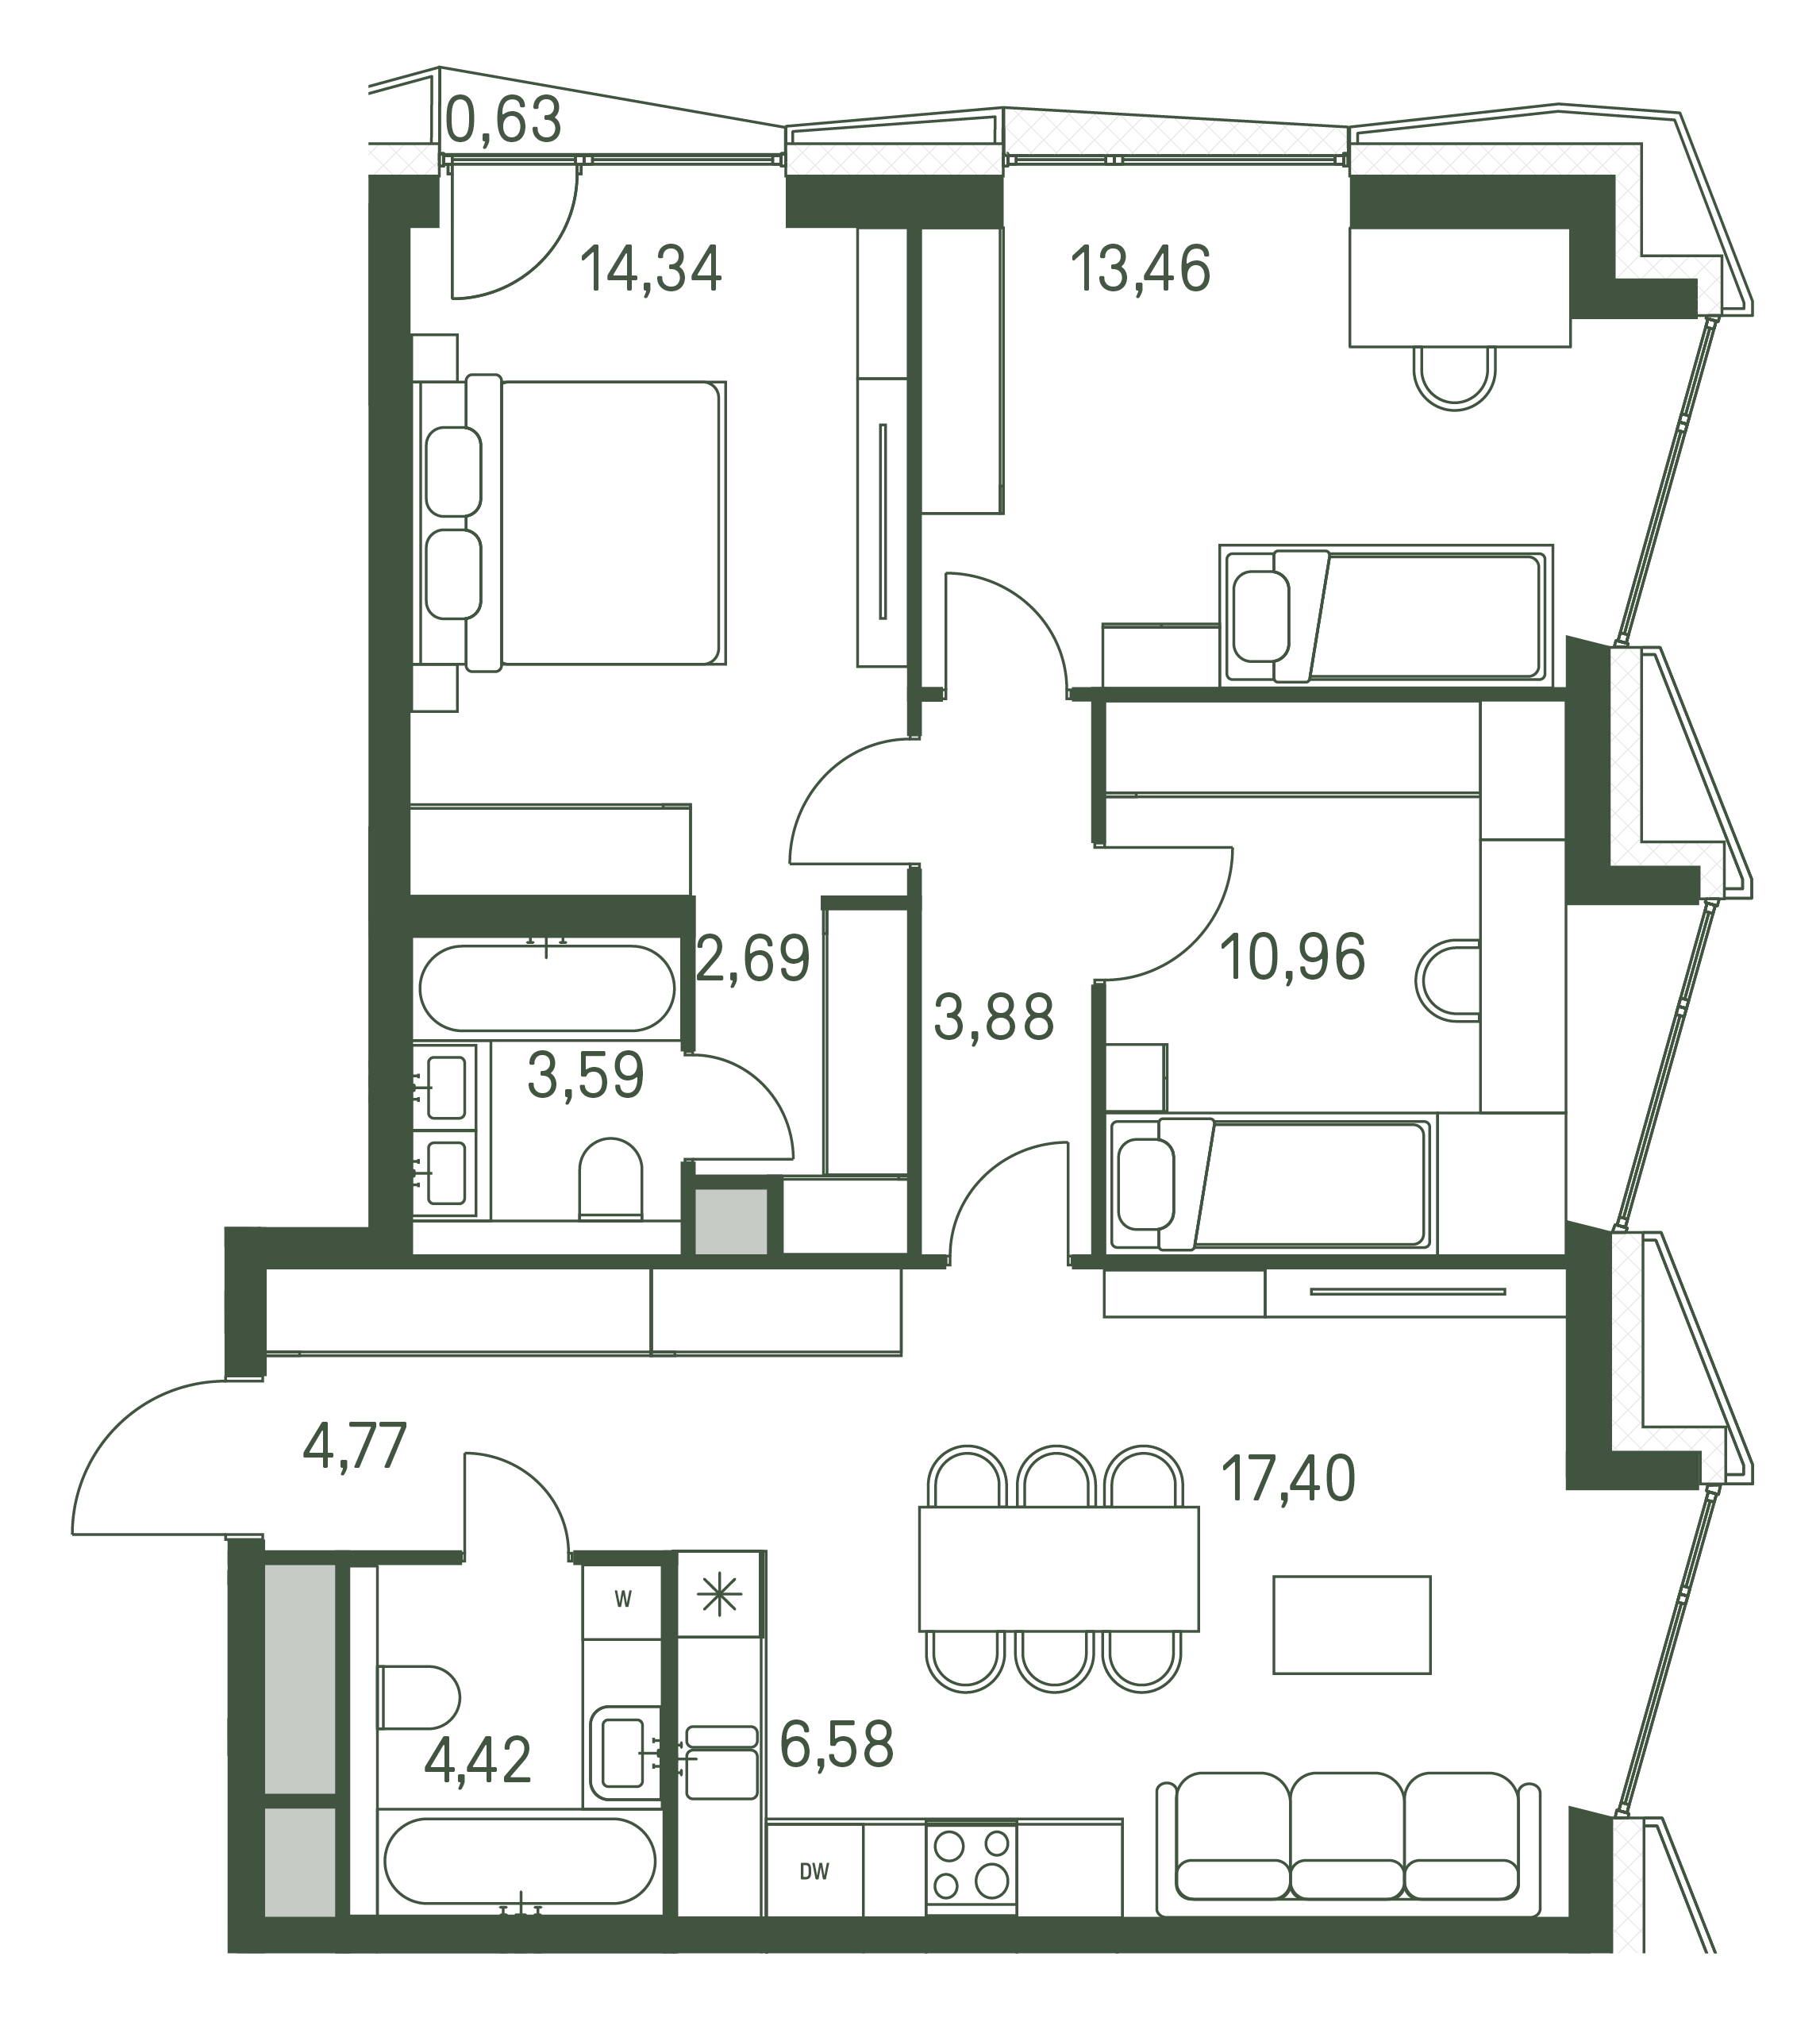 3 комн. квартира, 82.3 м², 26 этаж 